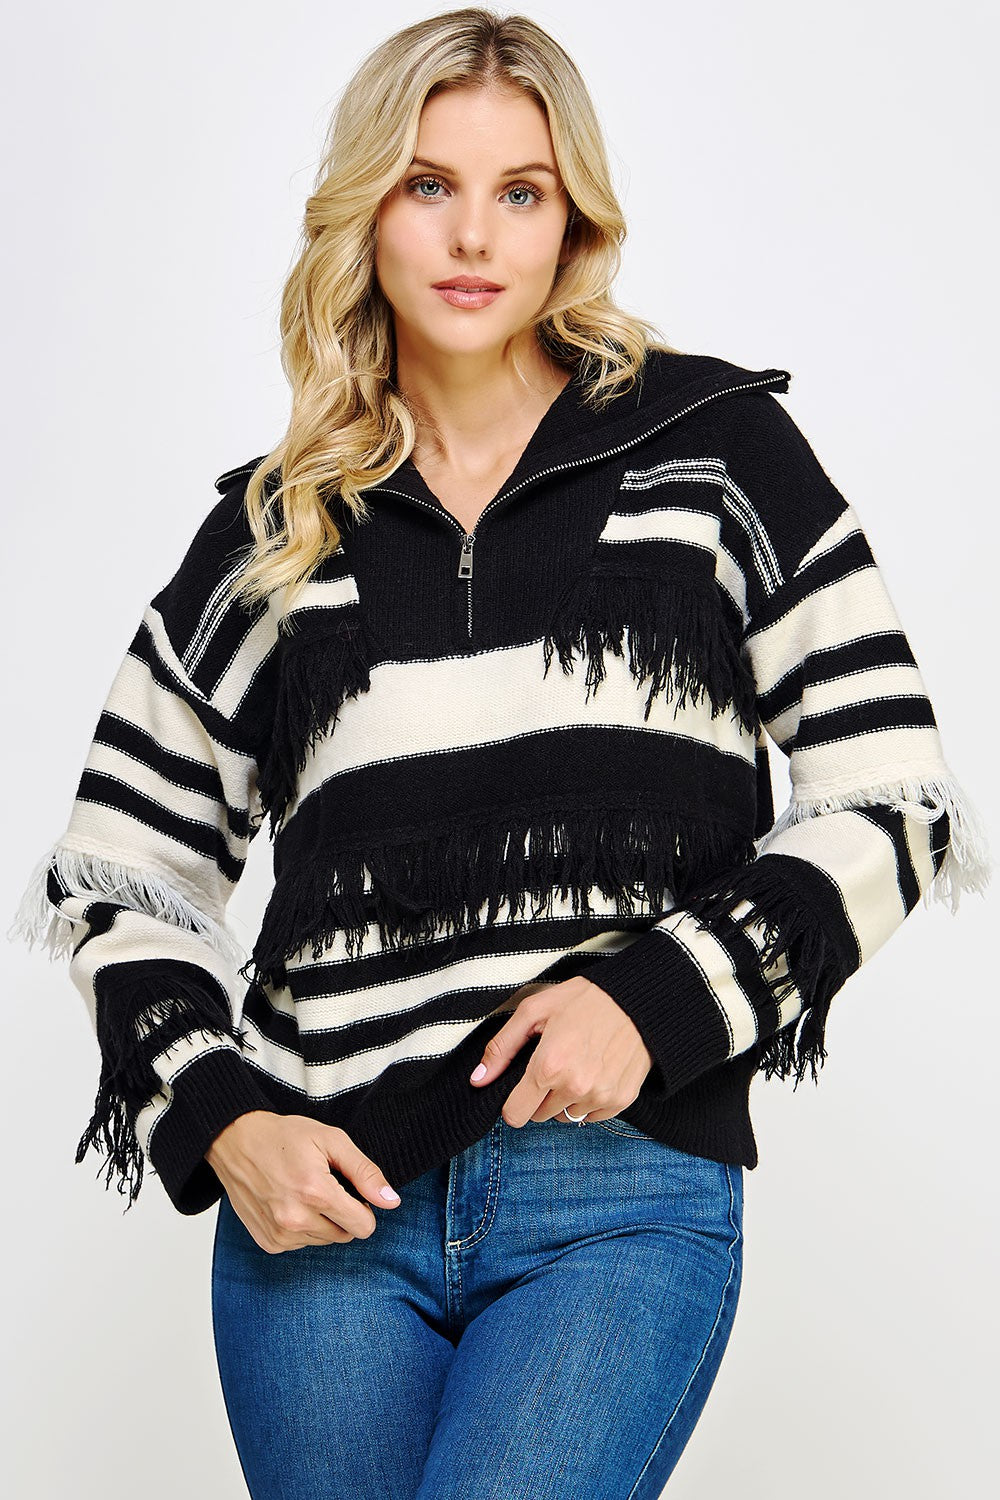 fringe black white zip sweater